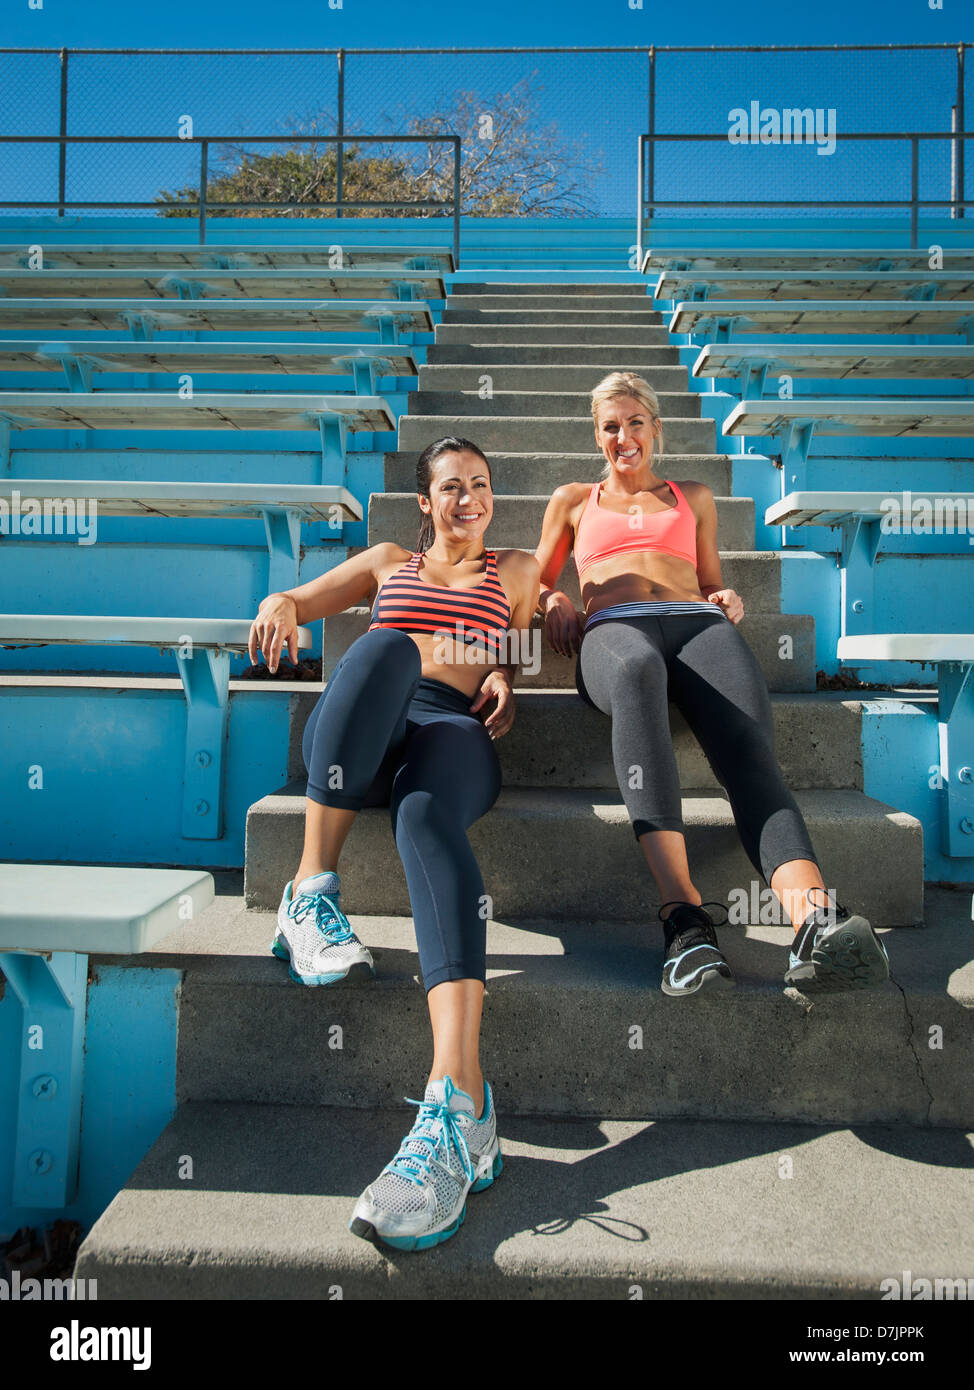 USA, California, Los Angeles, erholsamen zwei Frauen am Sportplatz Stockfoto